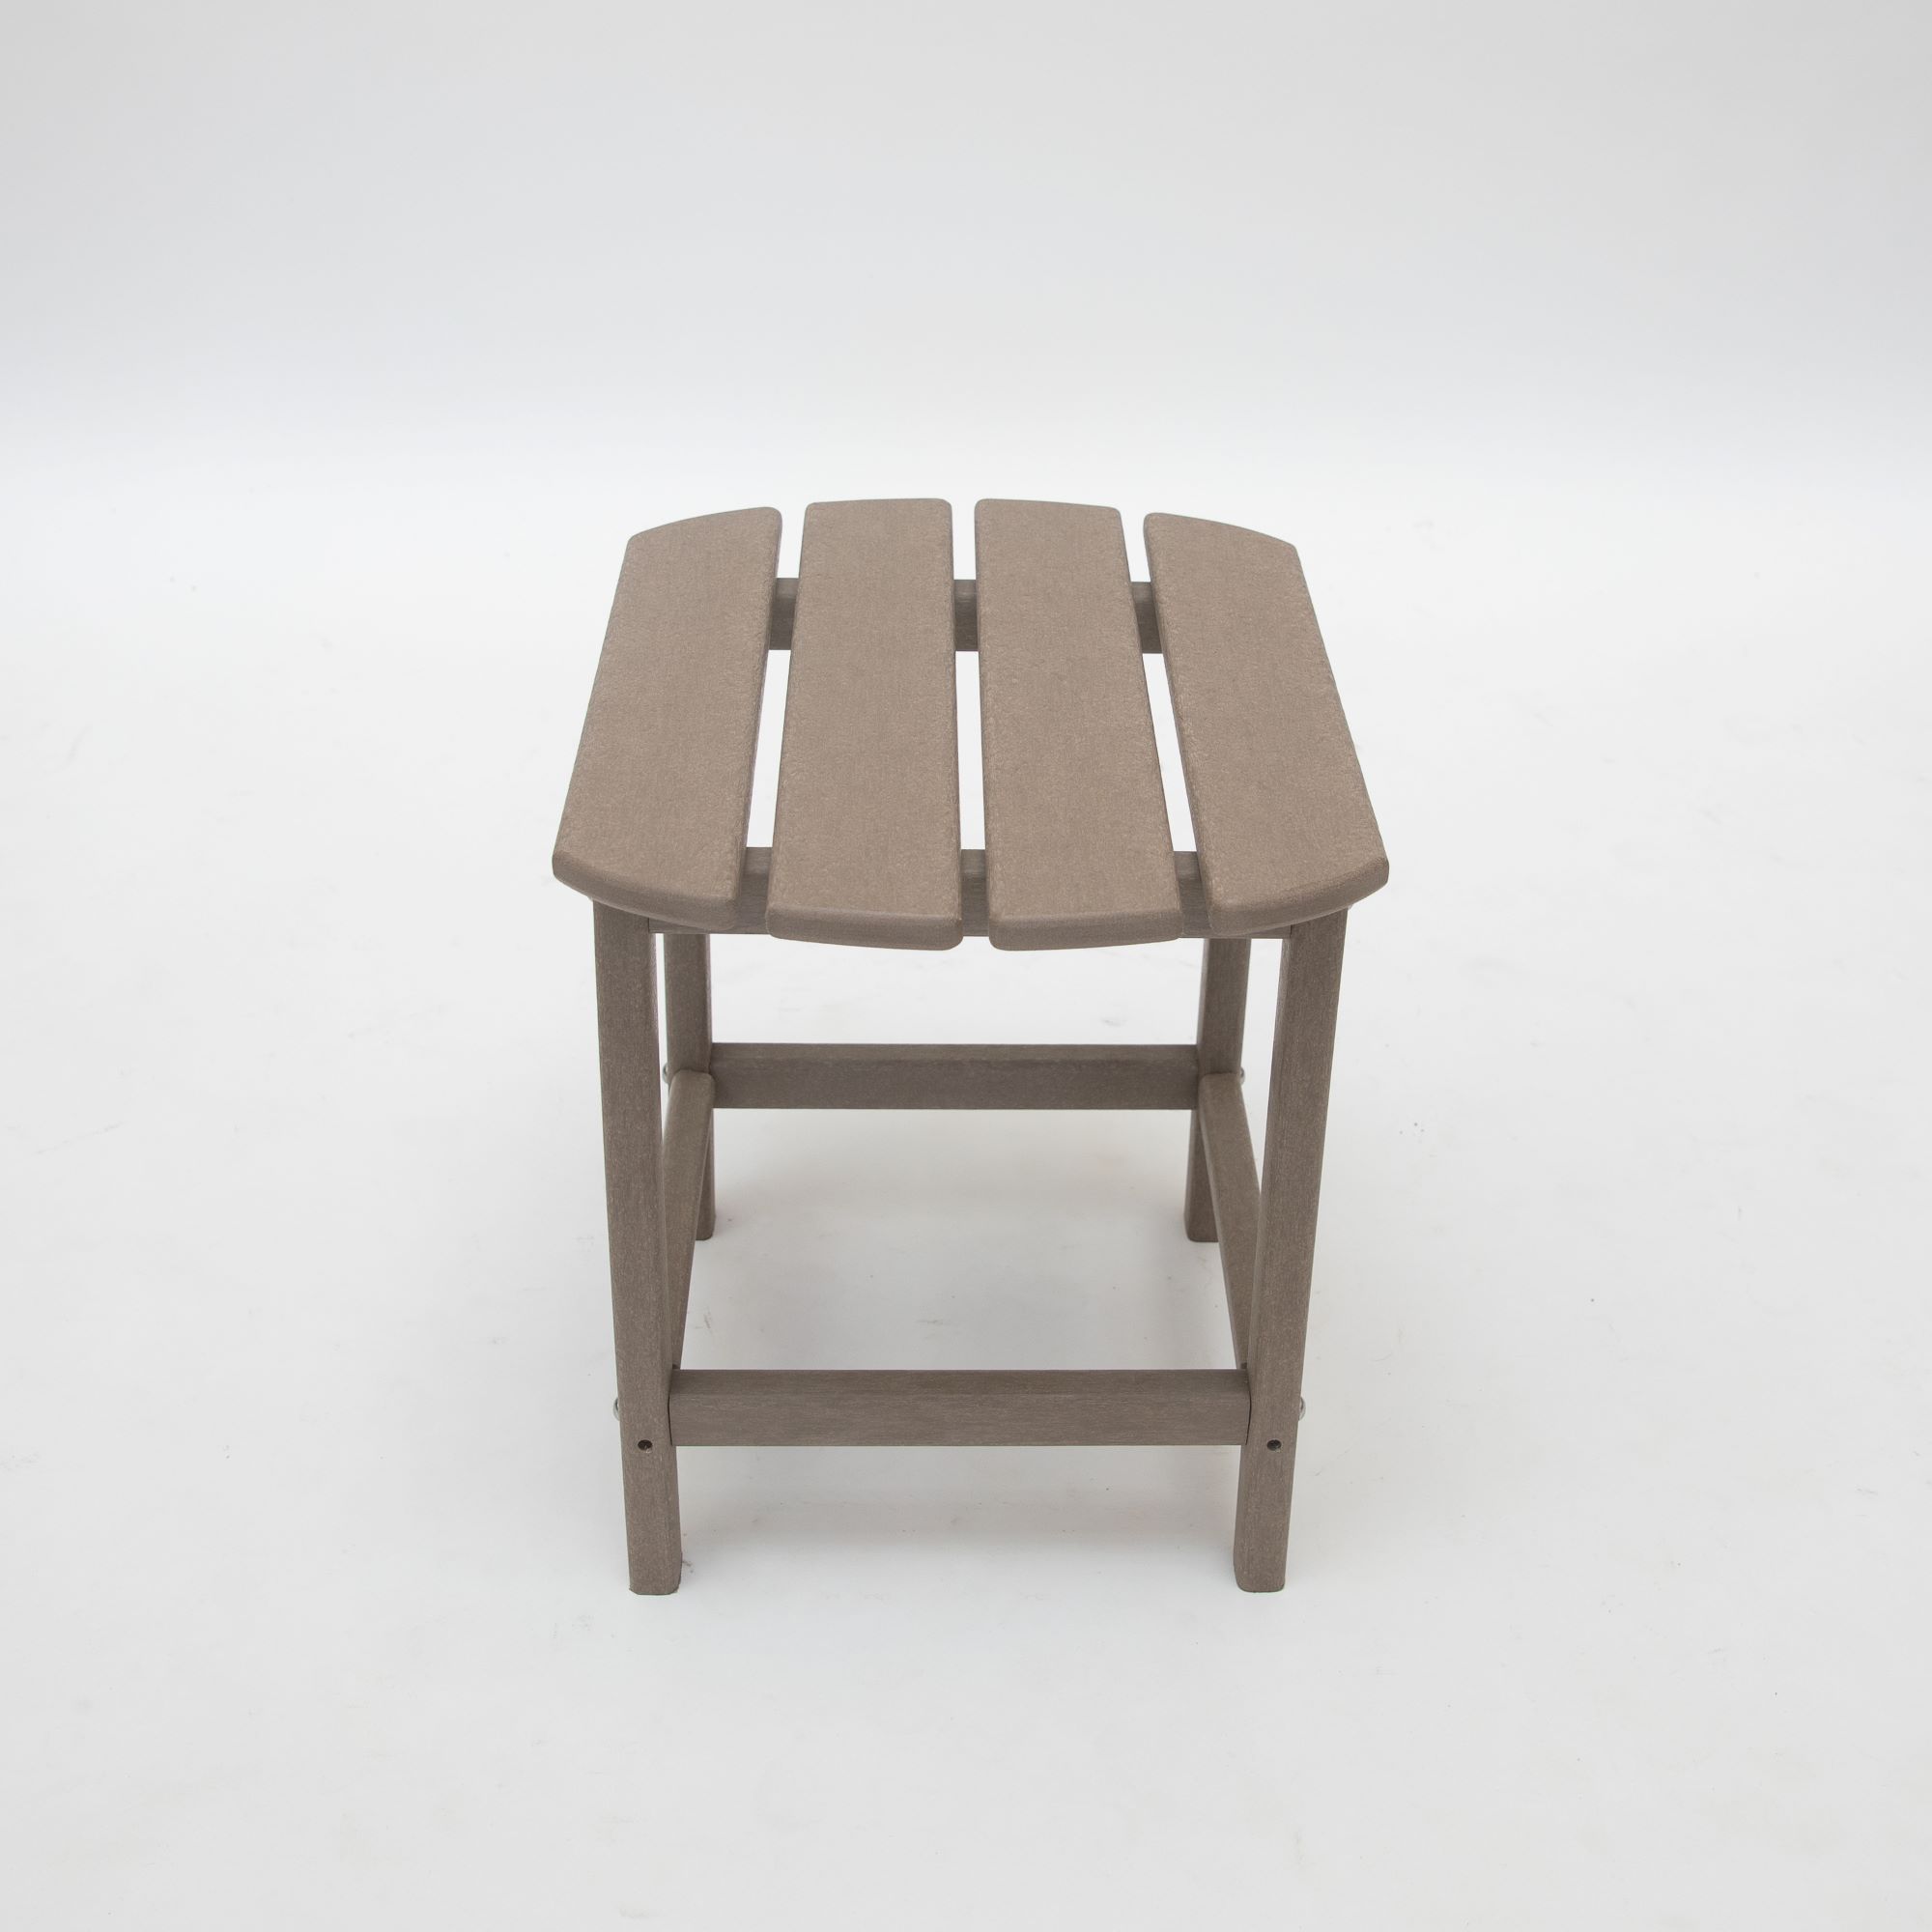 Corona 18" Recycled Plastic Side Table - Weathered Wood - image 3 of 6